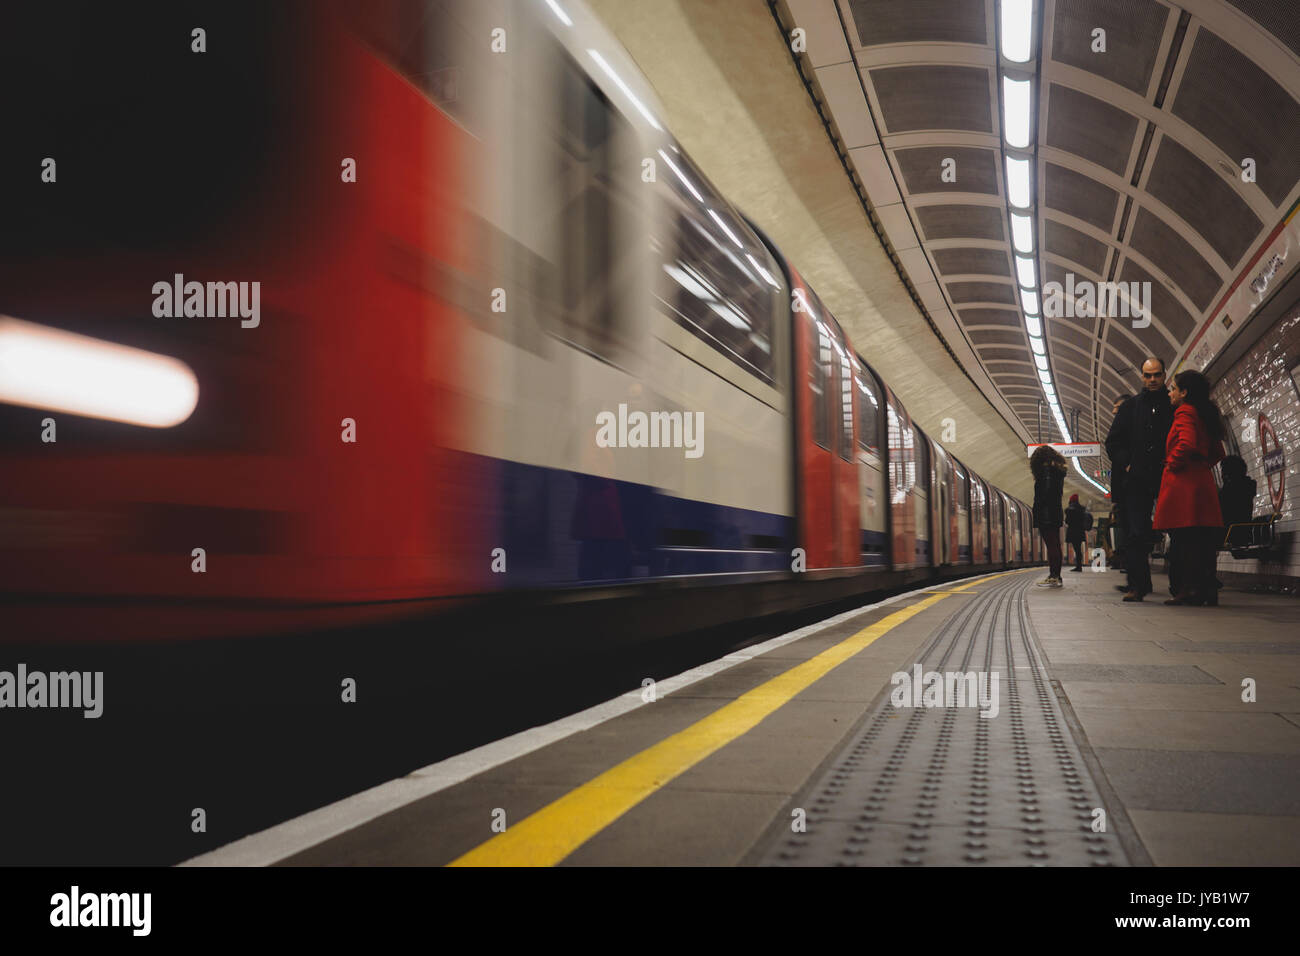 London underground platform with train in movement. London, 2017. Landscape format. Stock Photo